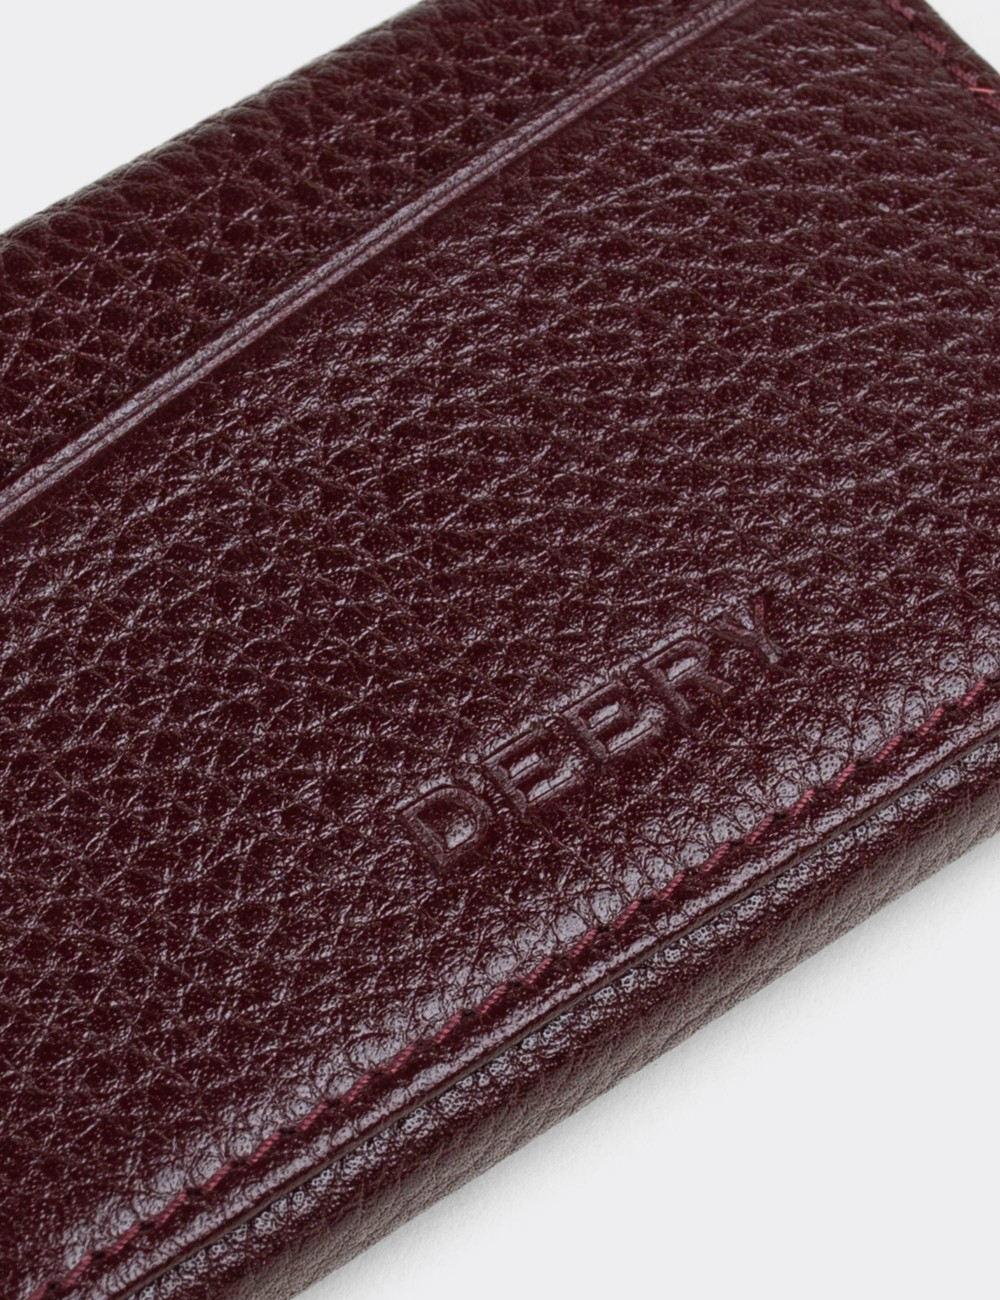  Leather Burgundy Men's Wallet - 00612MBRDZ01